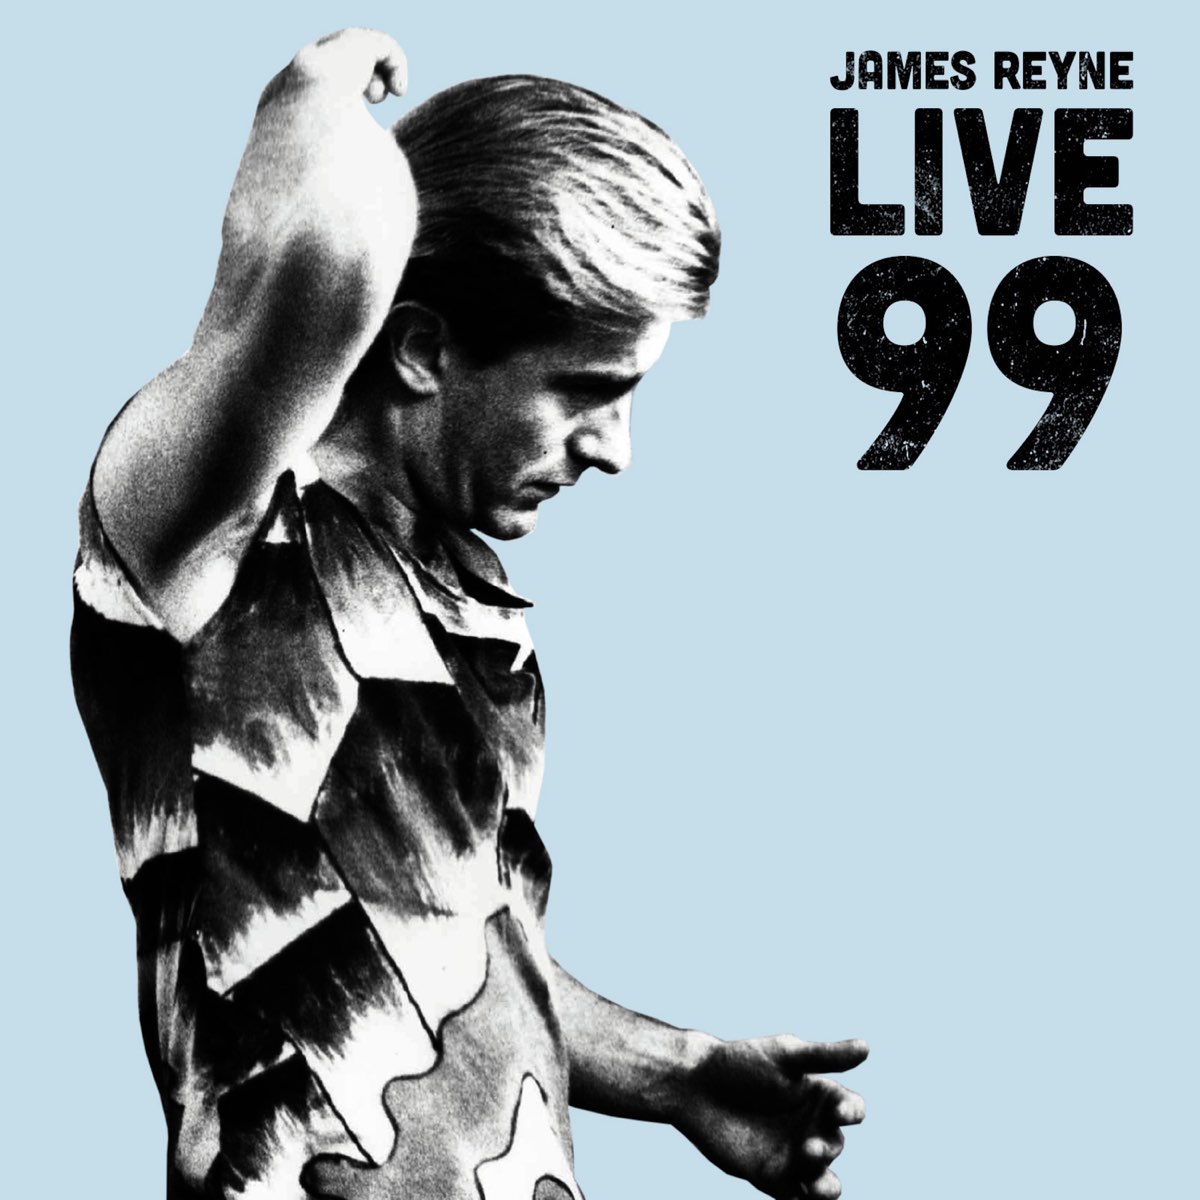 Live step. James Reyne young.